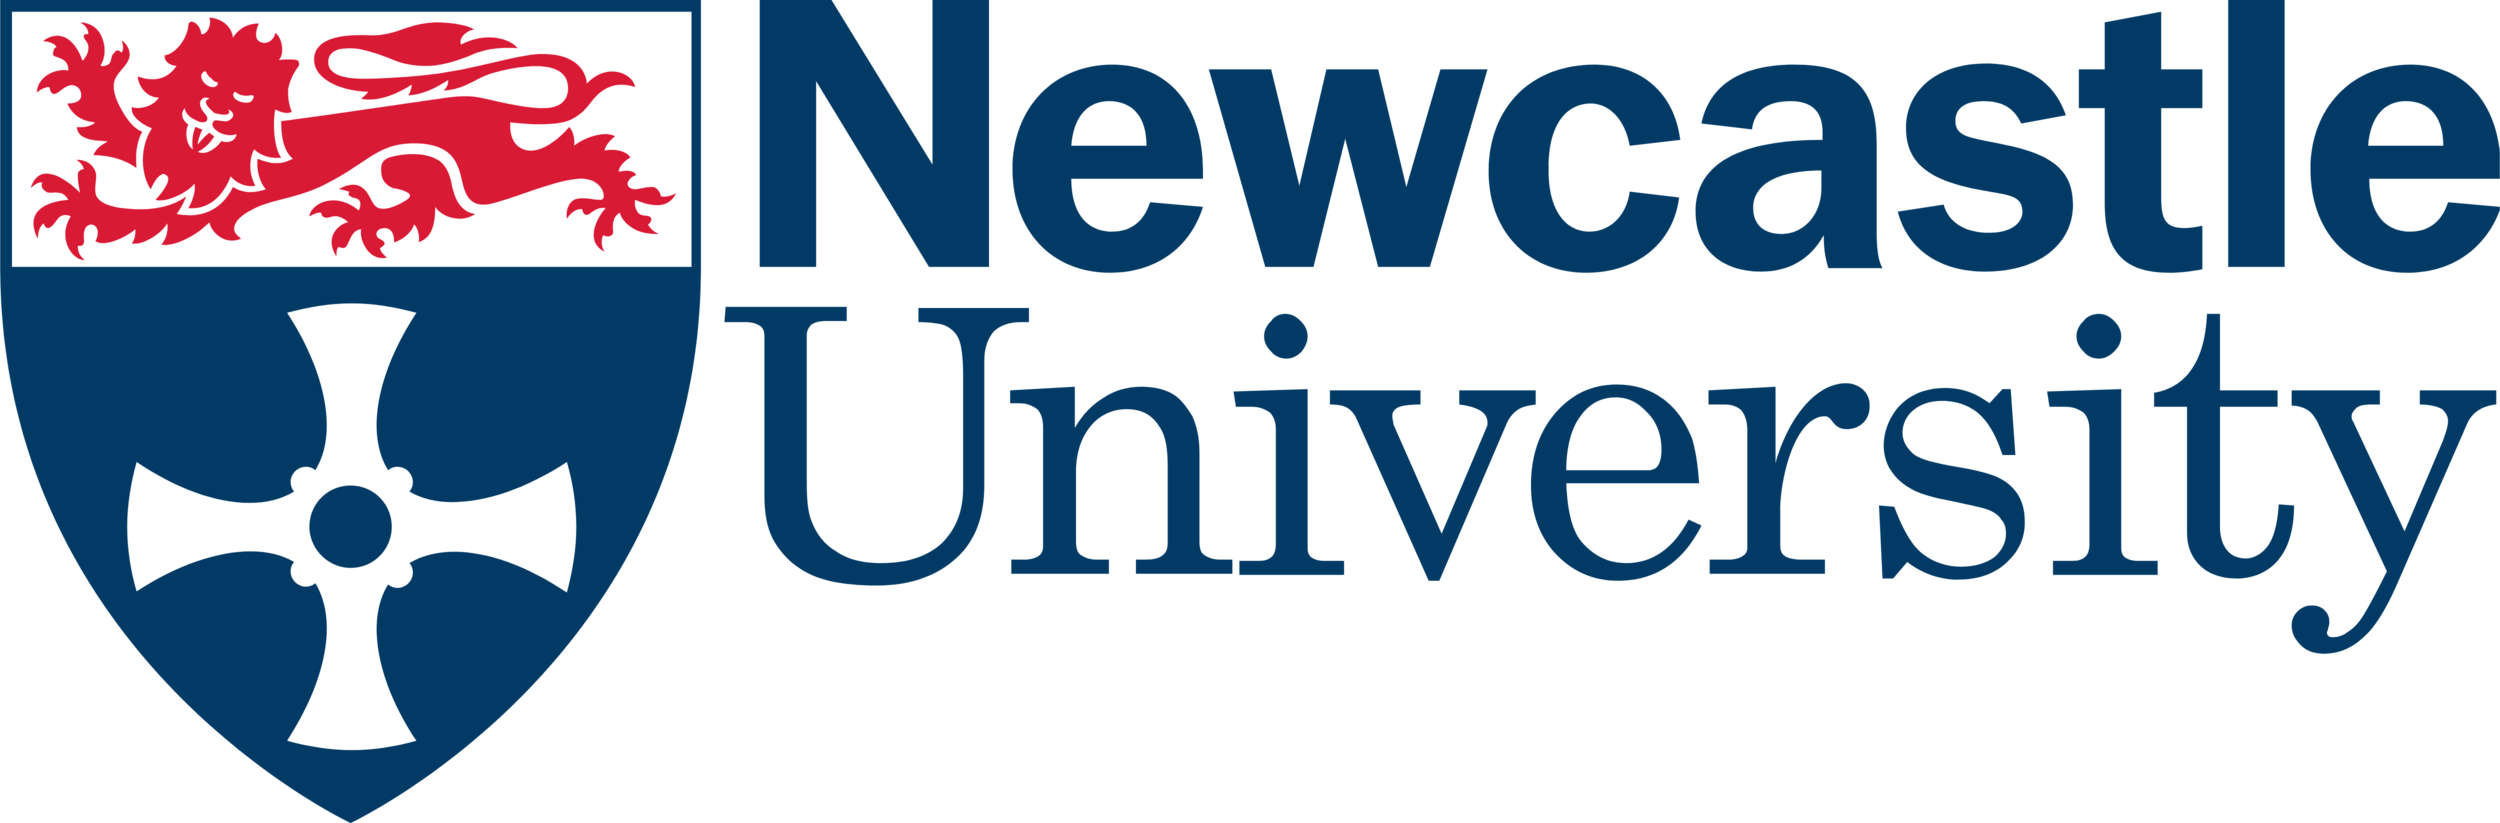 Newcastle_University_logo.png